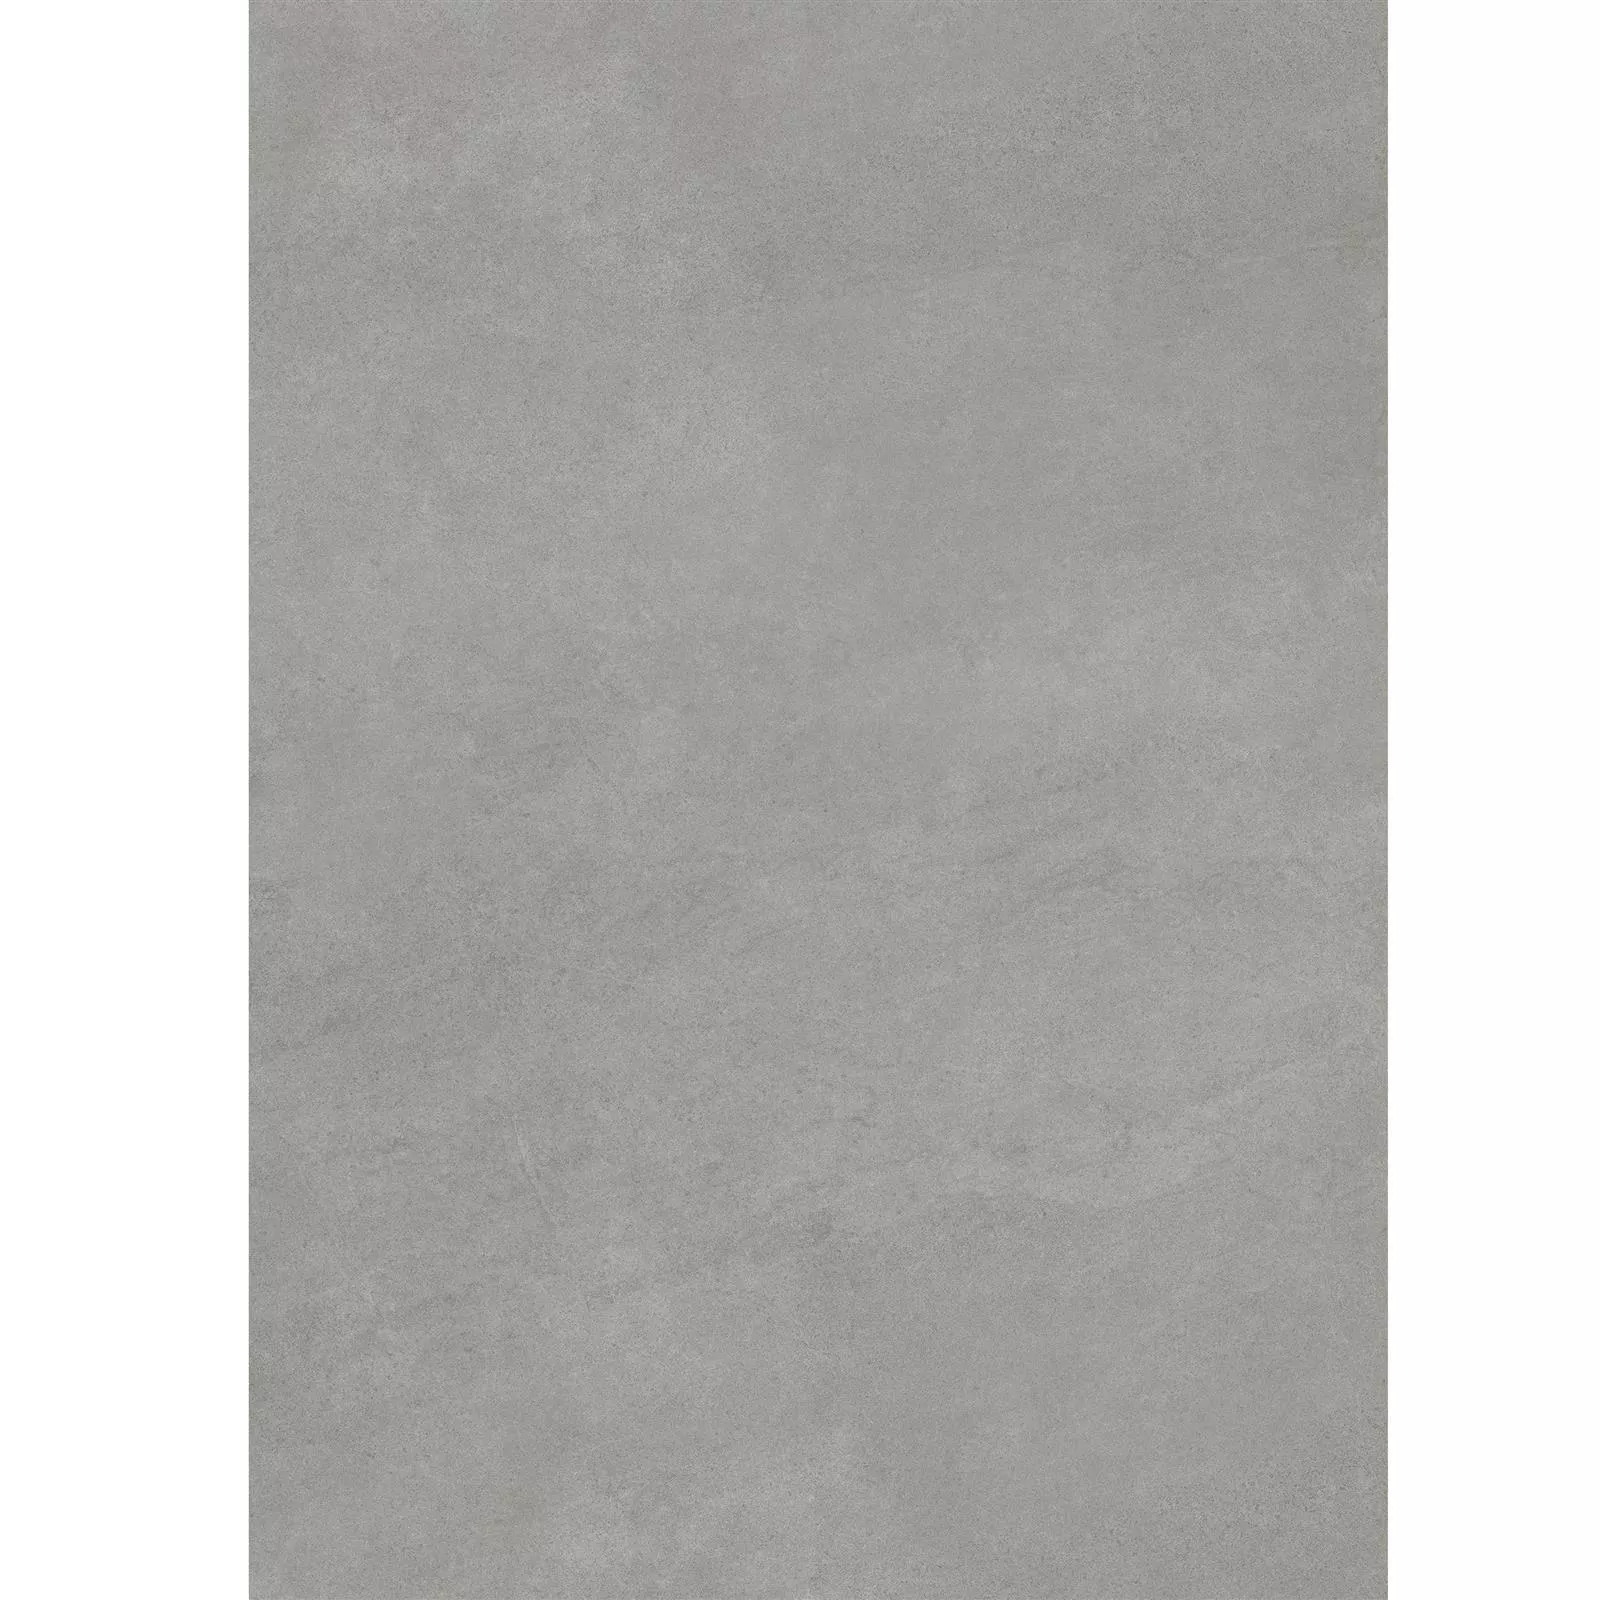 Sample Terrastegels Cement Optic Glinde Grijs 60x120cm